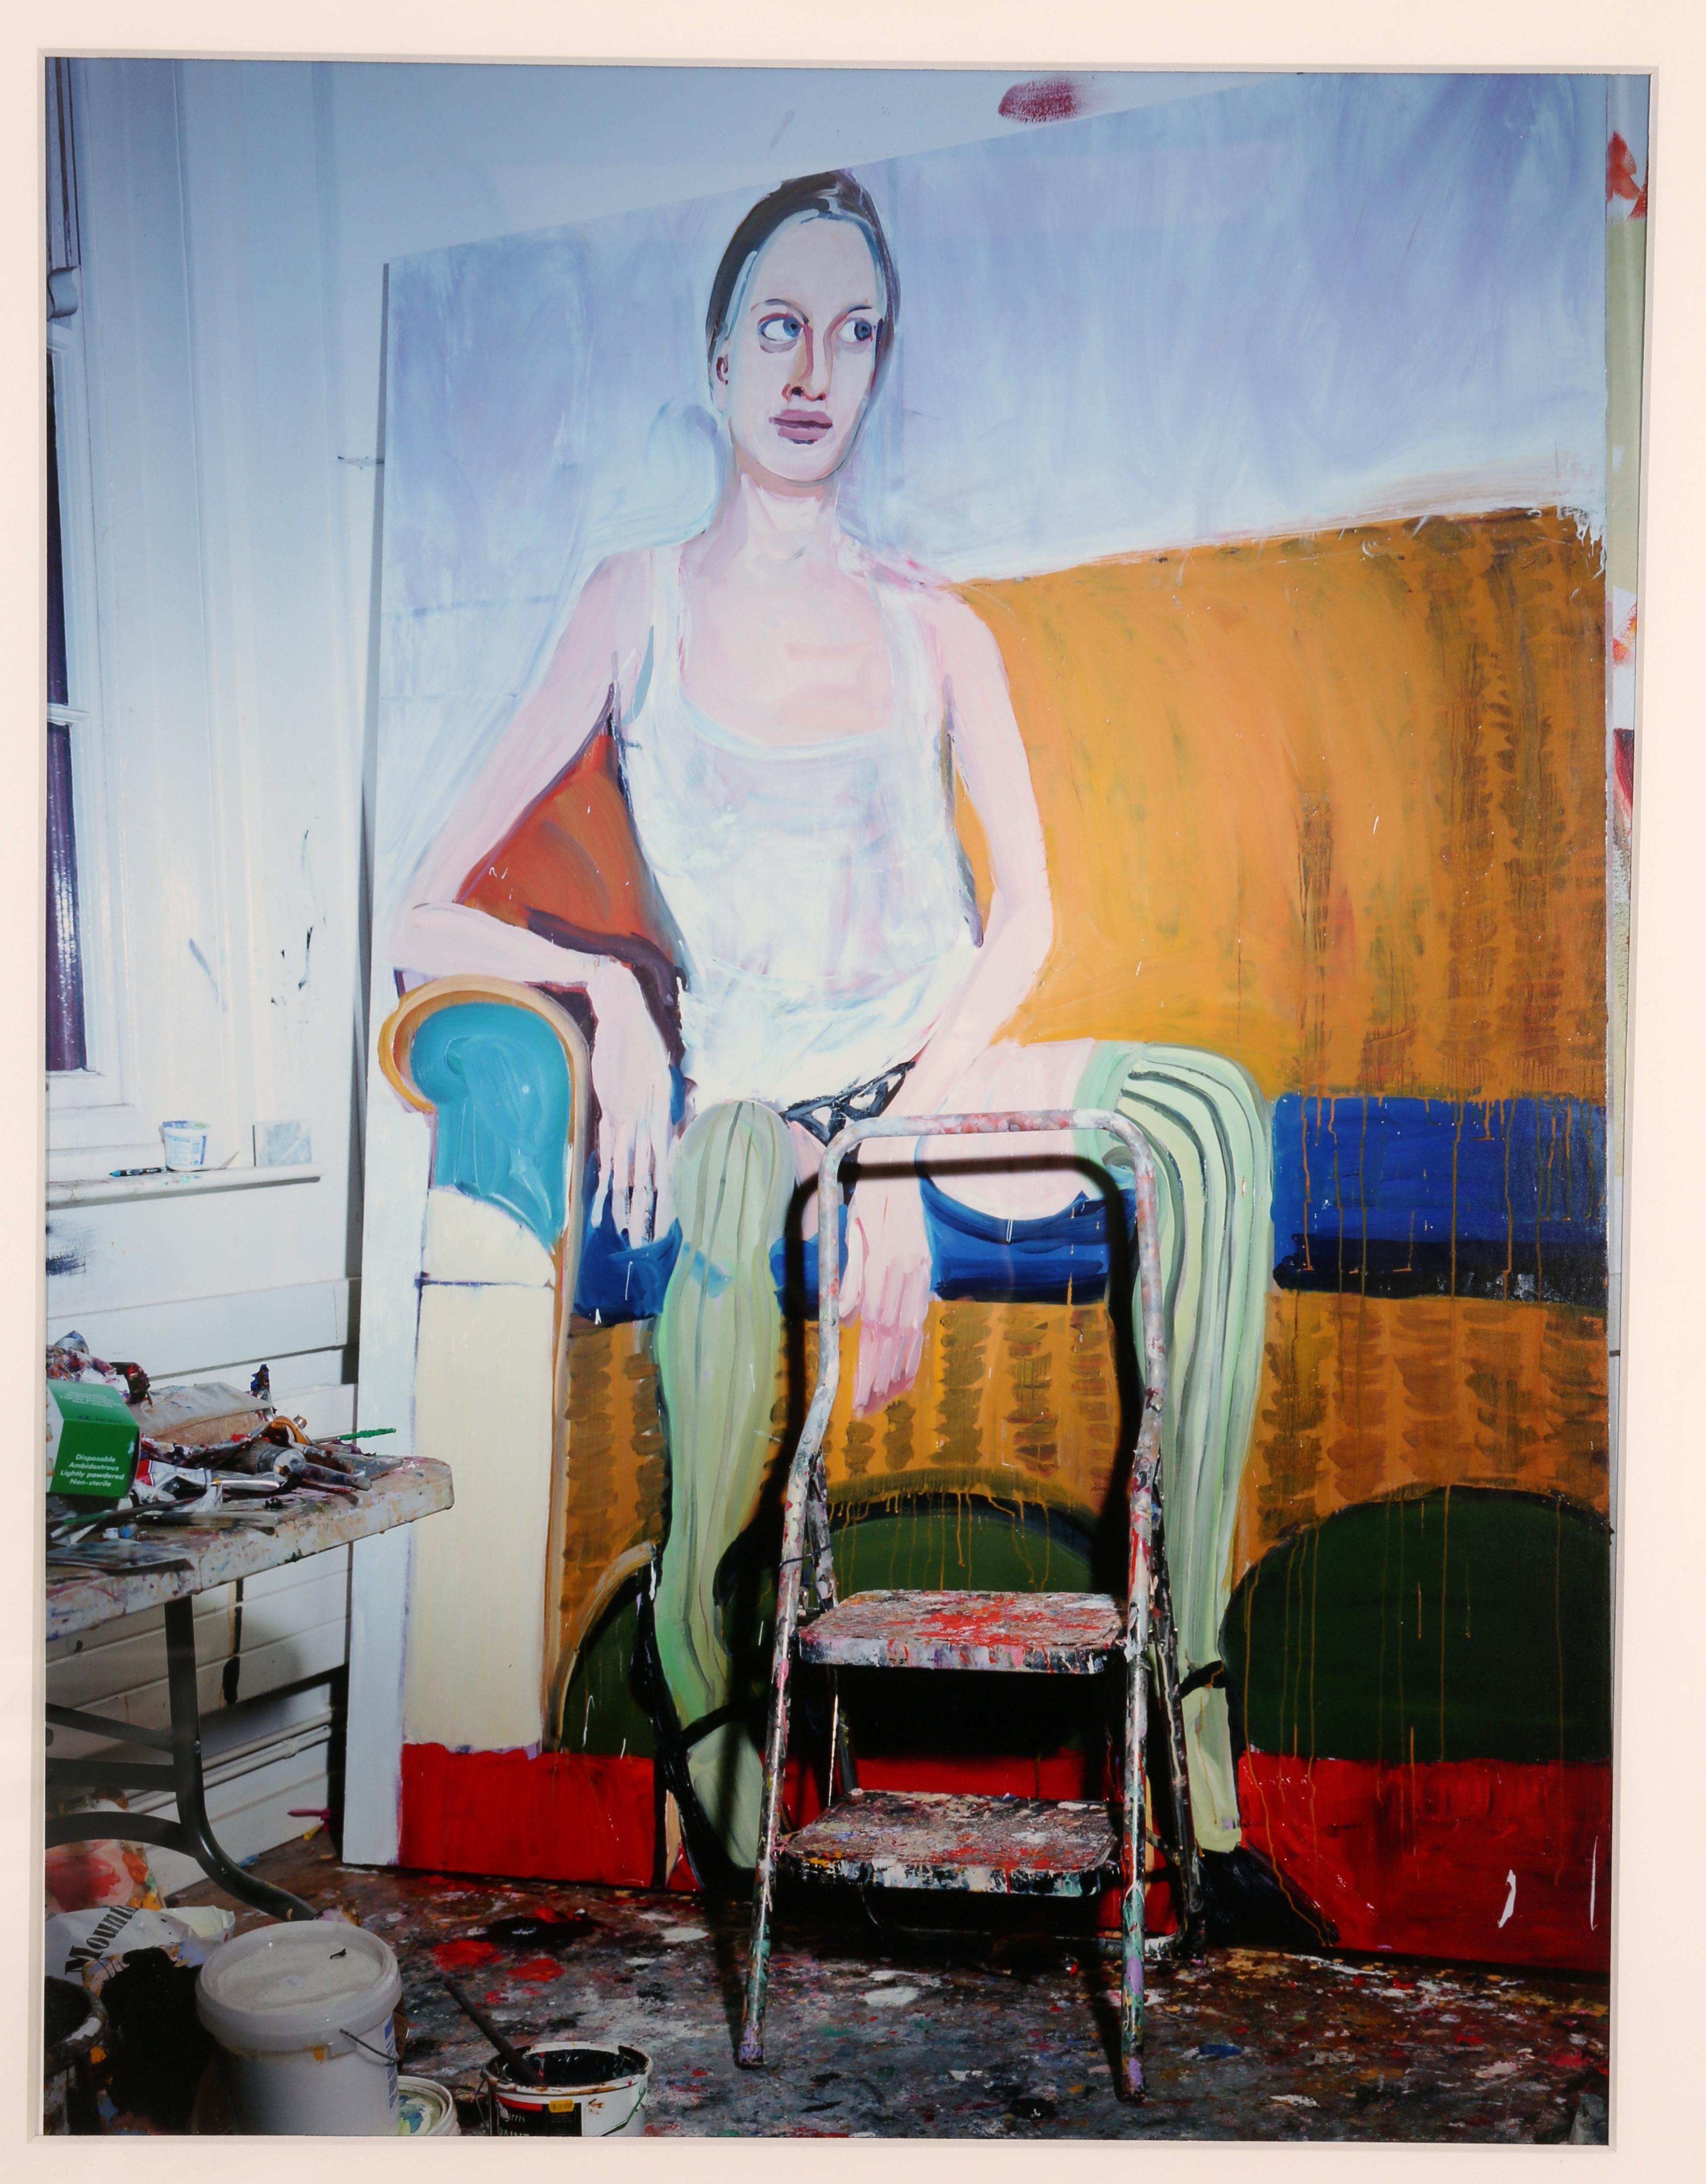 Kristen, Painting by Chantal Joffe (from Kristen series) 